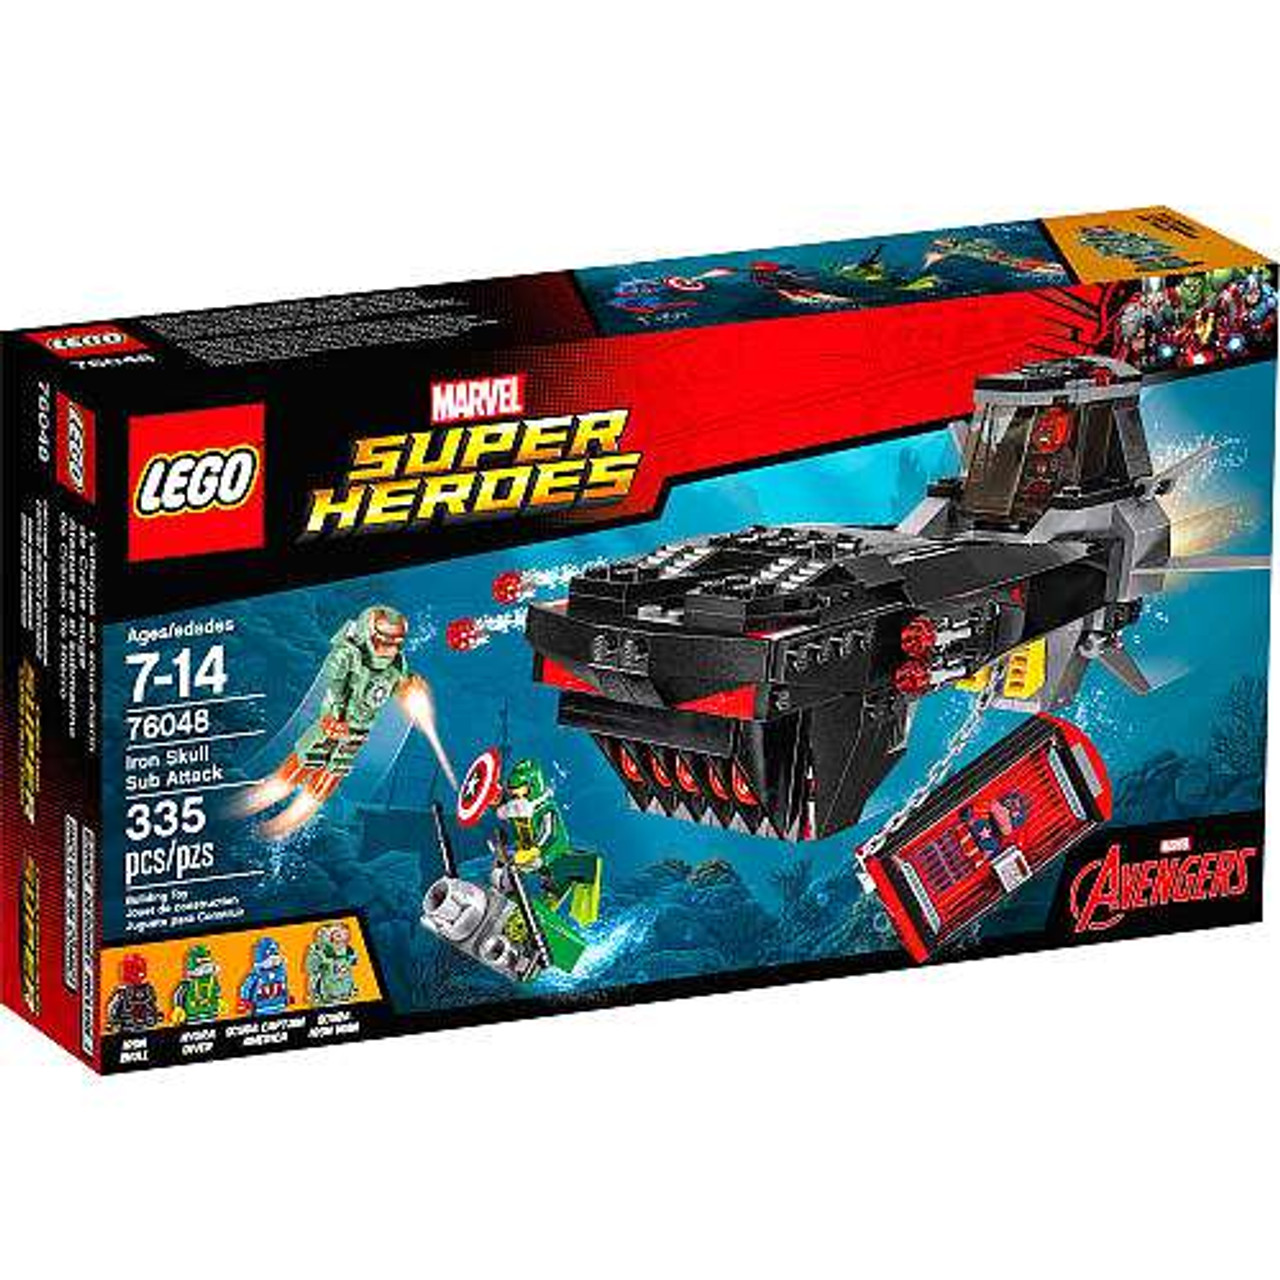 4x studs lego marvel superheroes